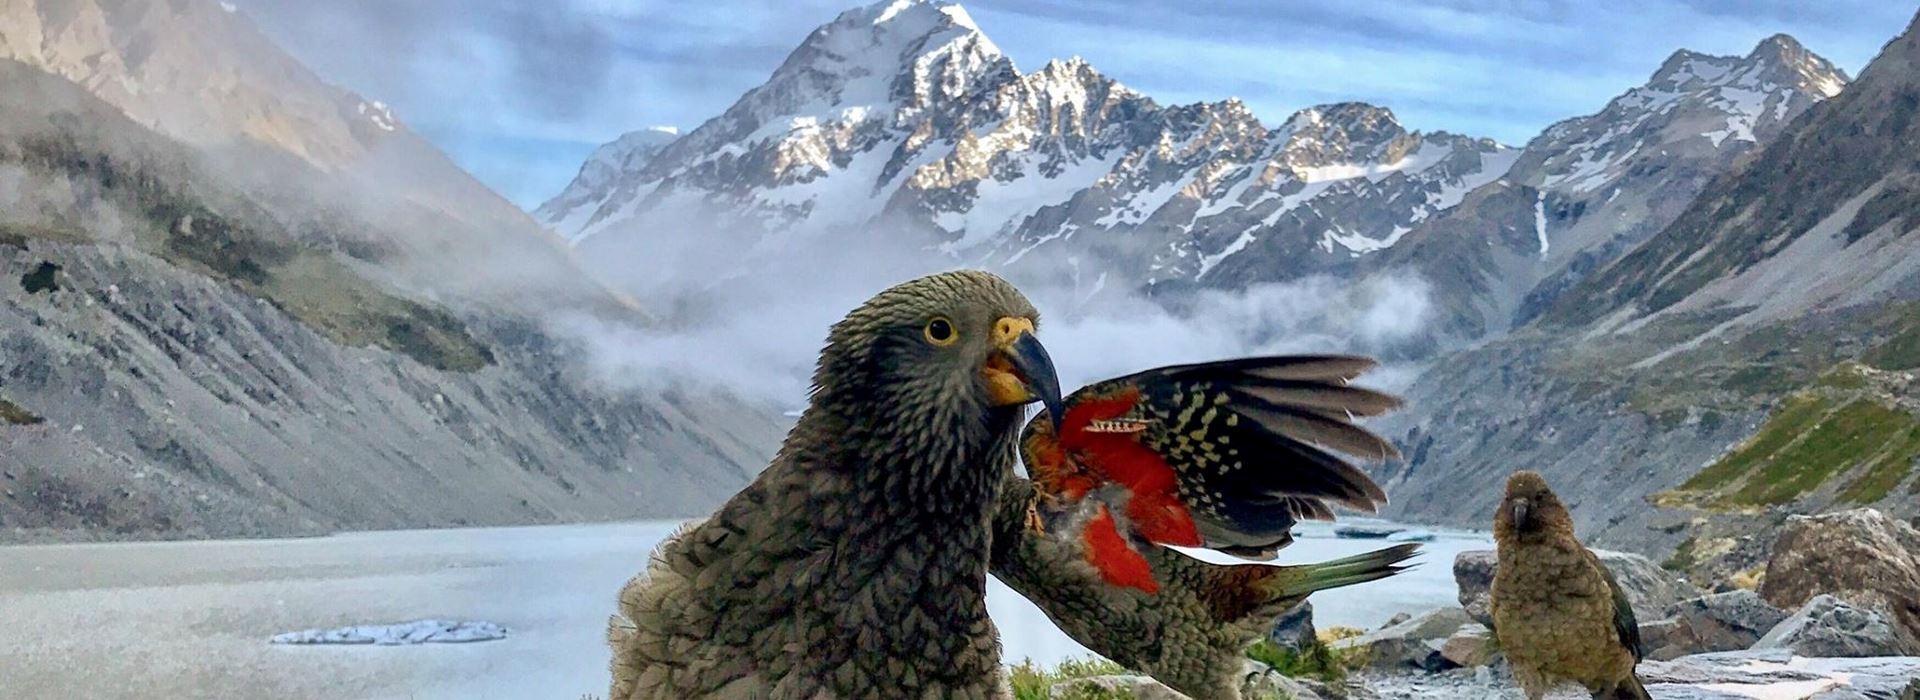 Fascinating Birdlife in New Zealand - Protecting wildlife